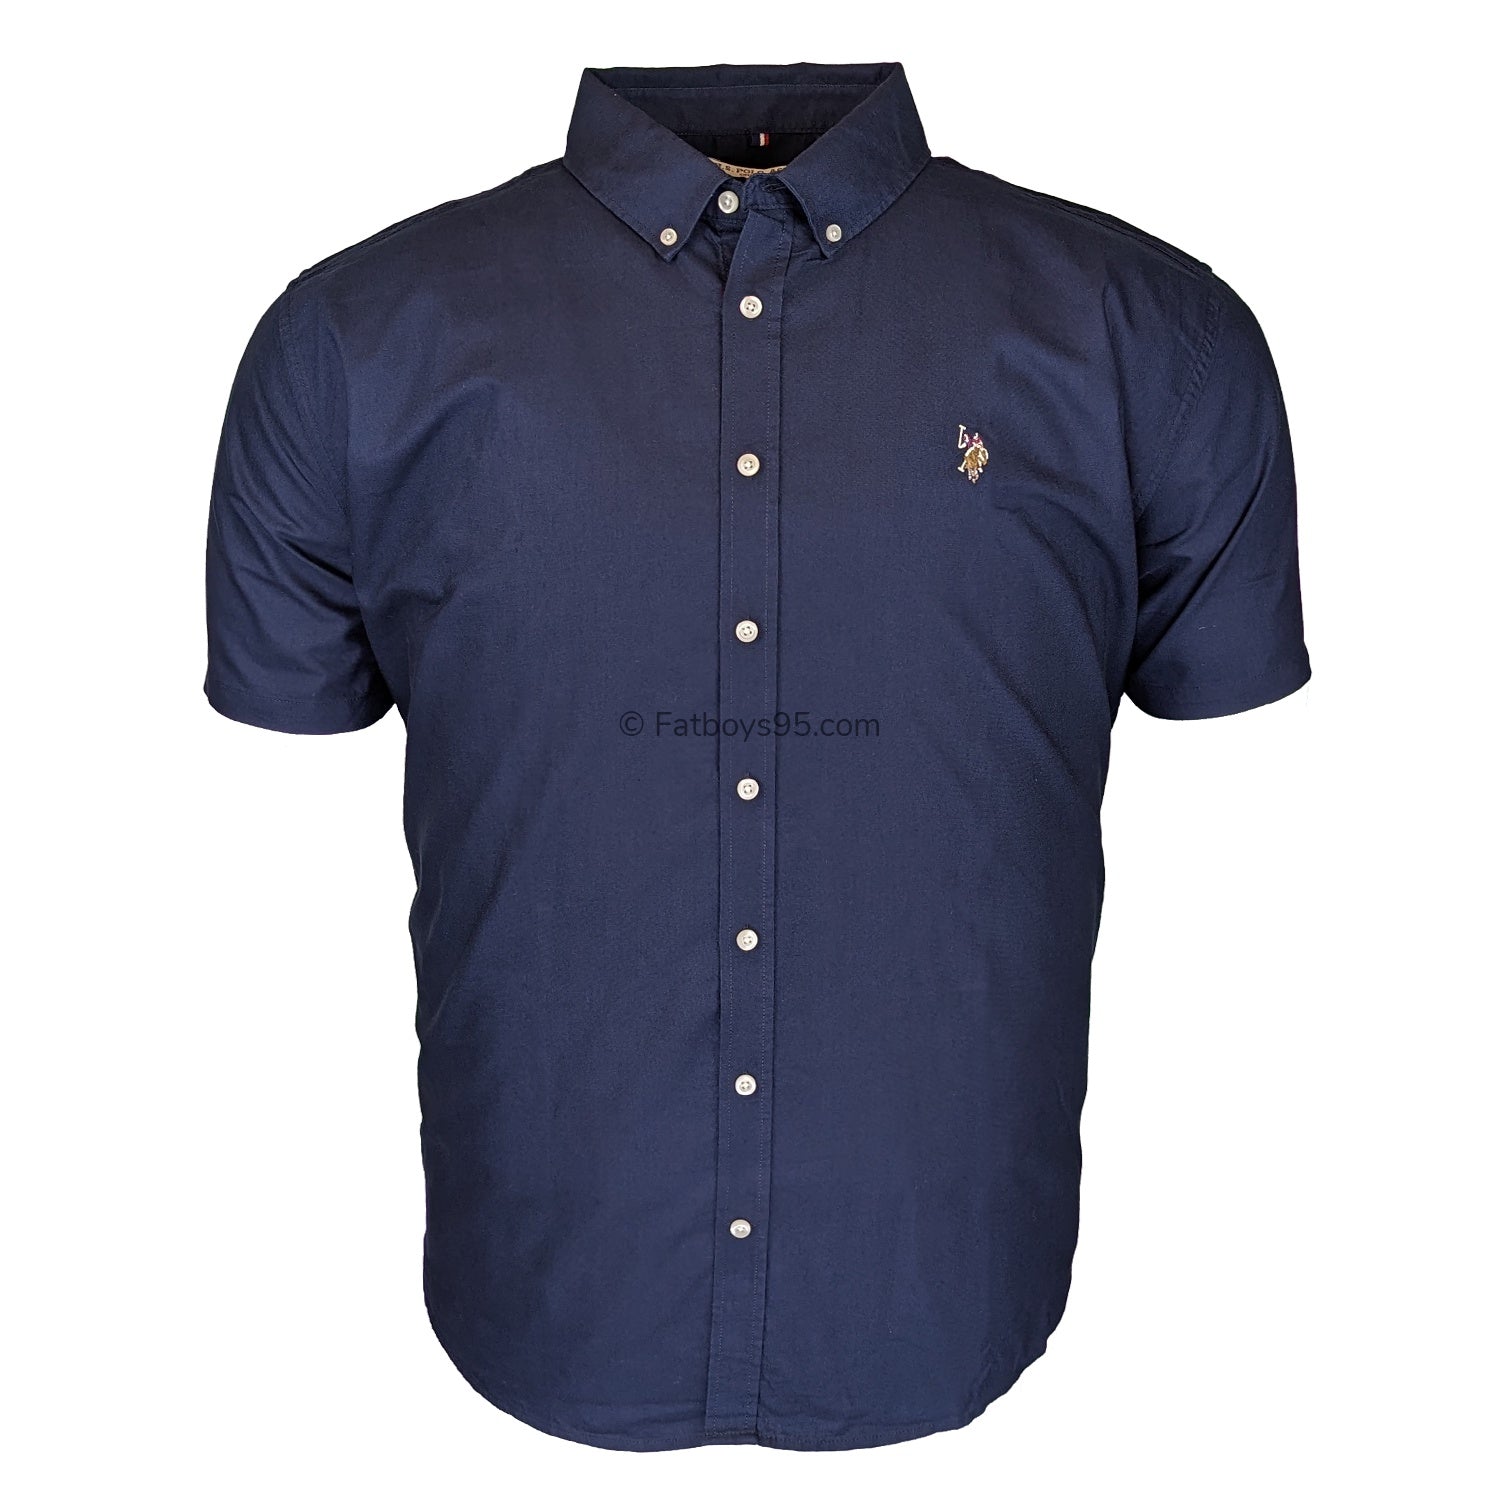 U.S. Polo Assn S/S Oxford Shirt - BUP0008 - Navy Blazer 1